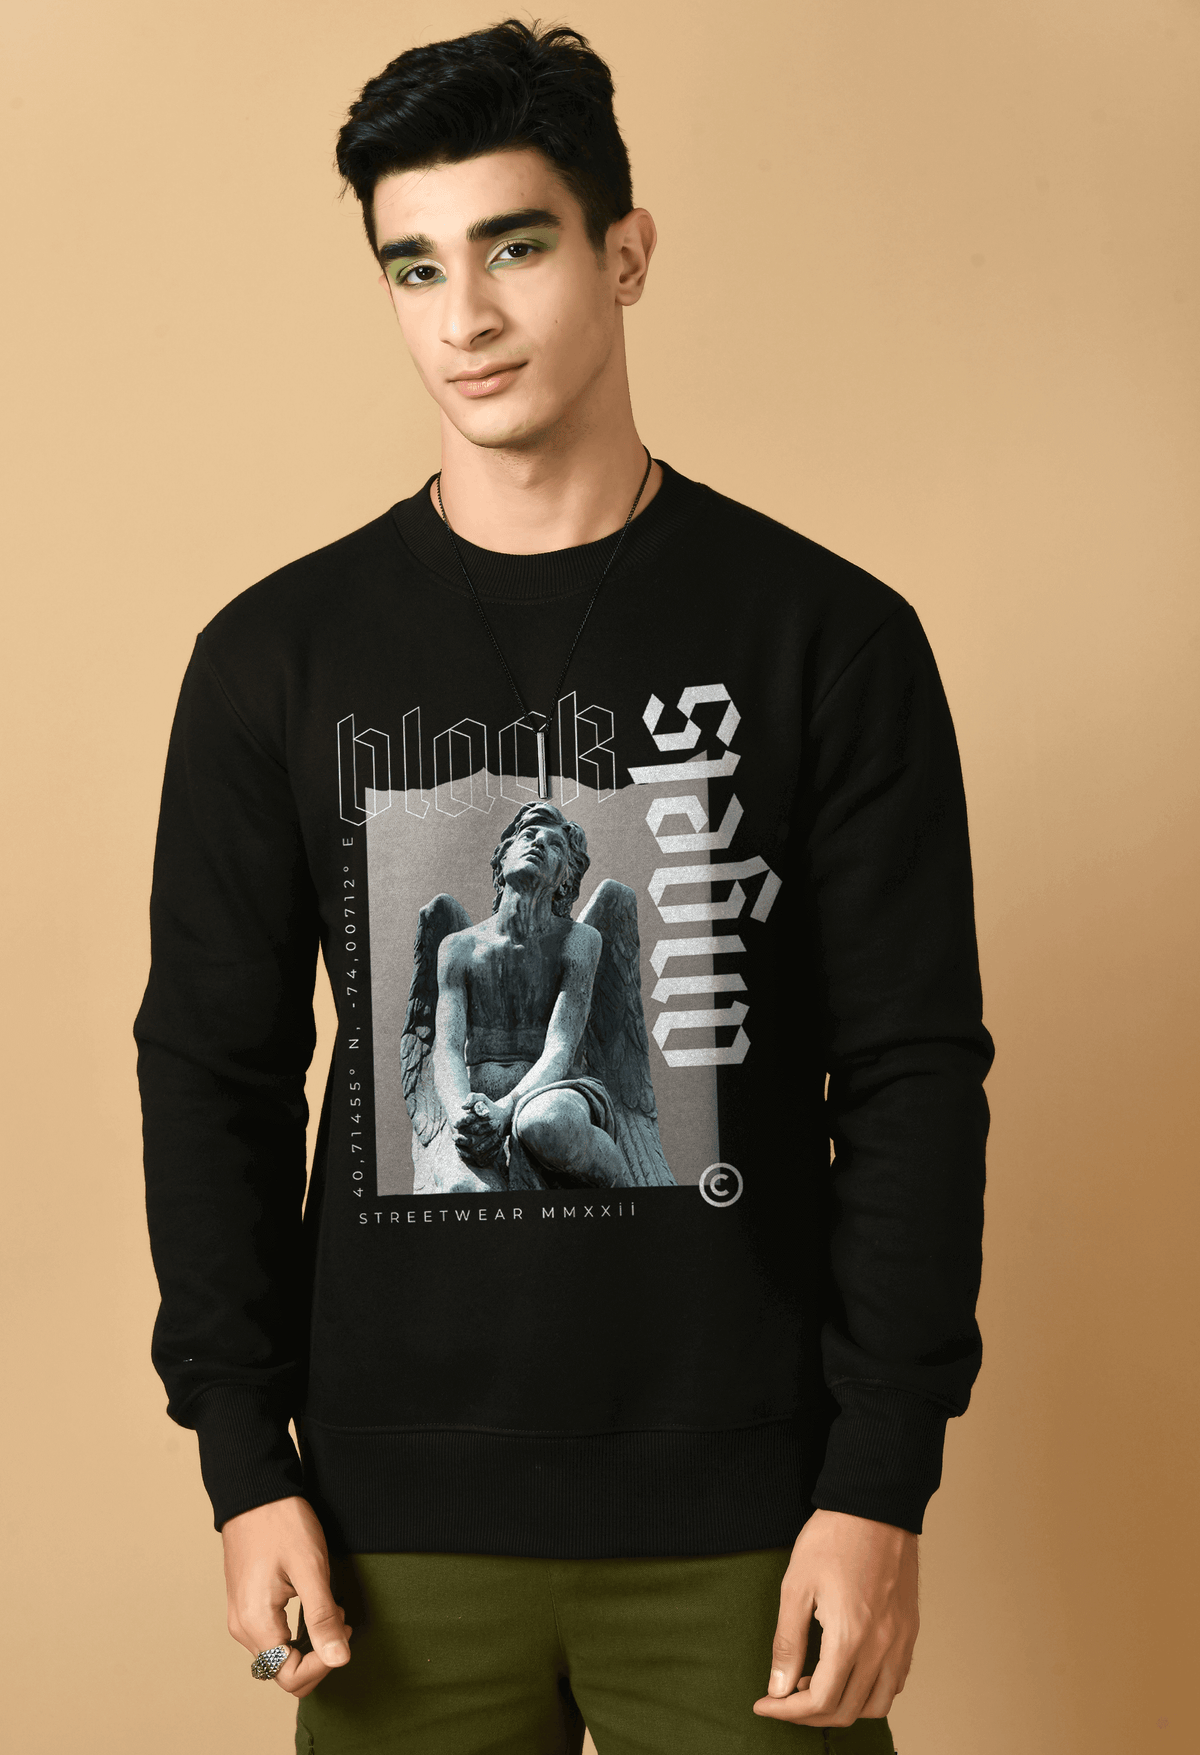 Black angels printed black color sweatshirt by offmint